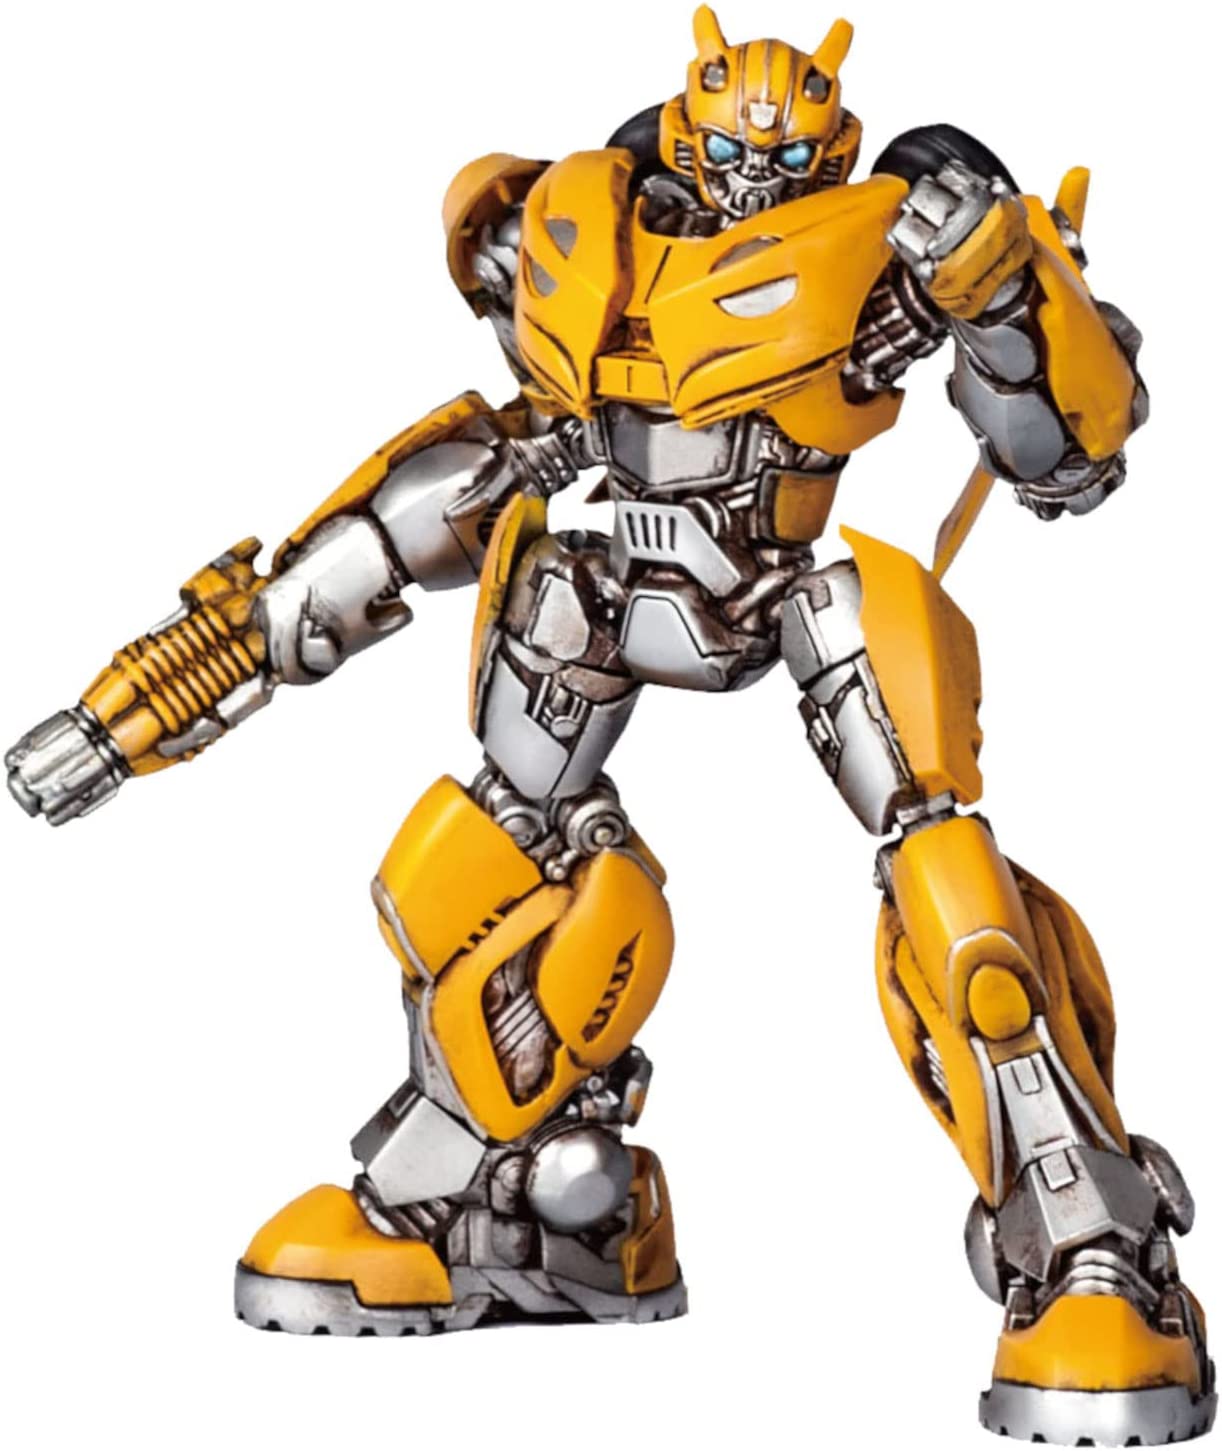 Transformers Bumblebee [B-127 Bumblebee]